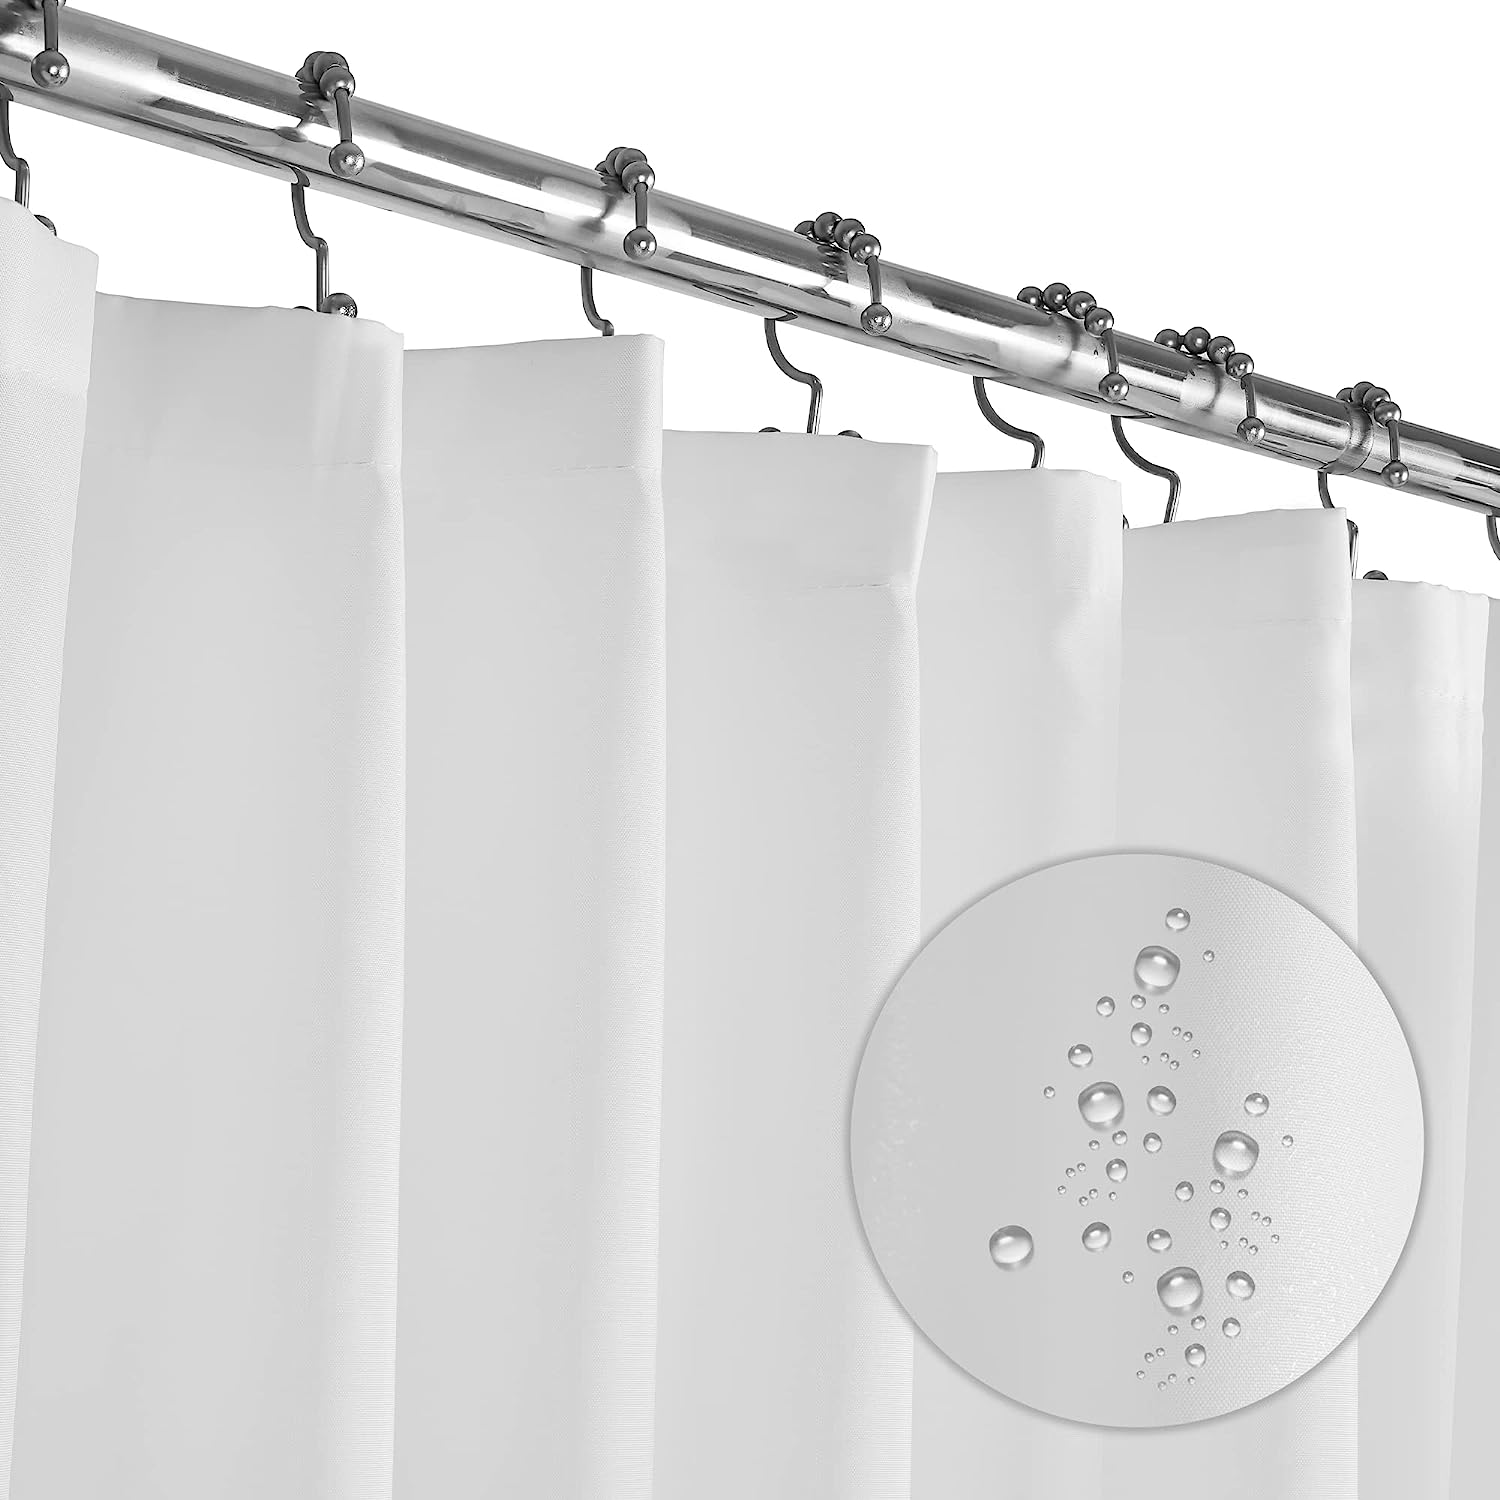 LiBa Fabric Bathroom Shower Curtain, 72" W x 72" H White Heavy Duty Waterproof Shower Curtain